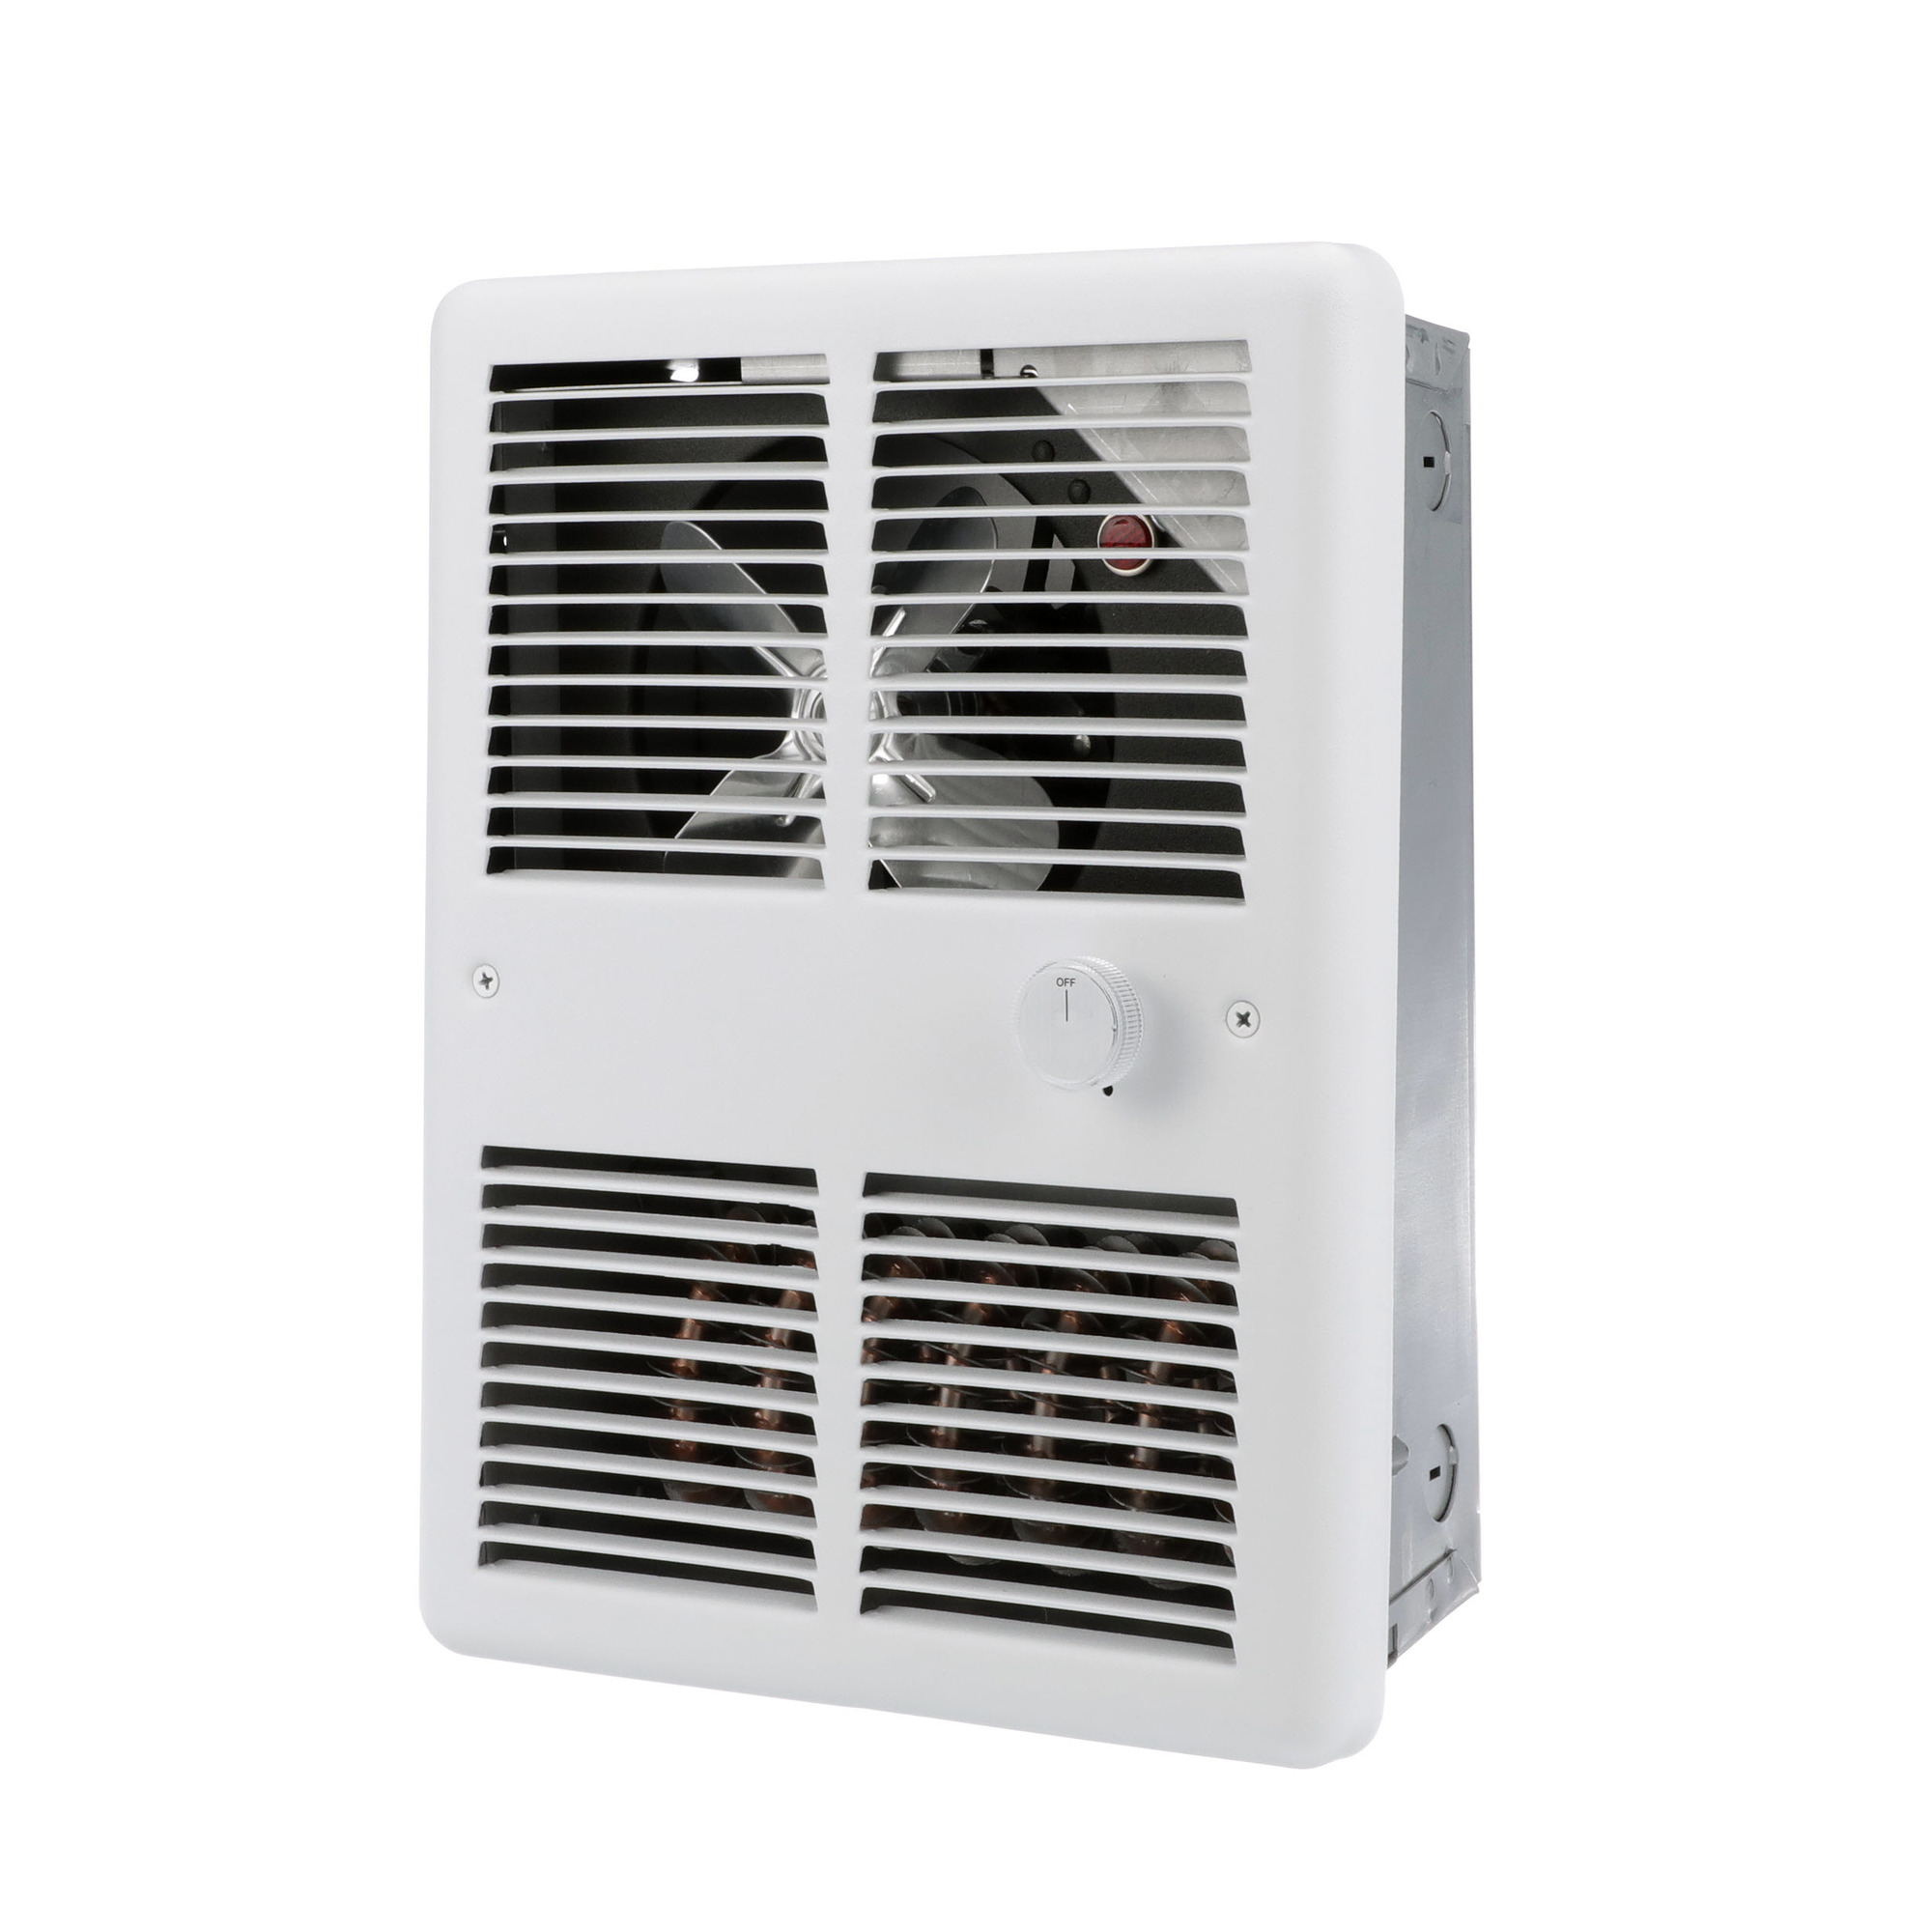 TPI, 2250/1688W 240/208V Fan Forced Wall Heater, White, Heat Output 7680 Btu/hour, Heating Capability 200 ftÂ², Fuel Type Electric, Model HF3222T2RPW